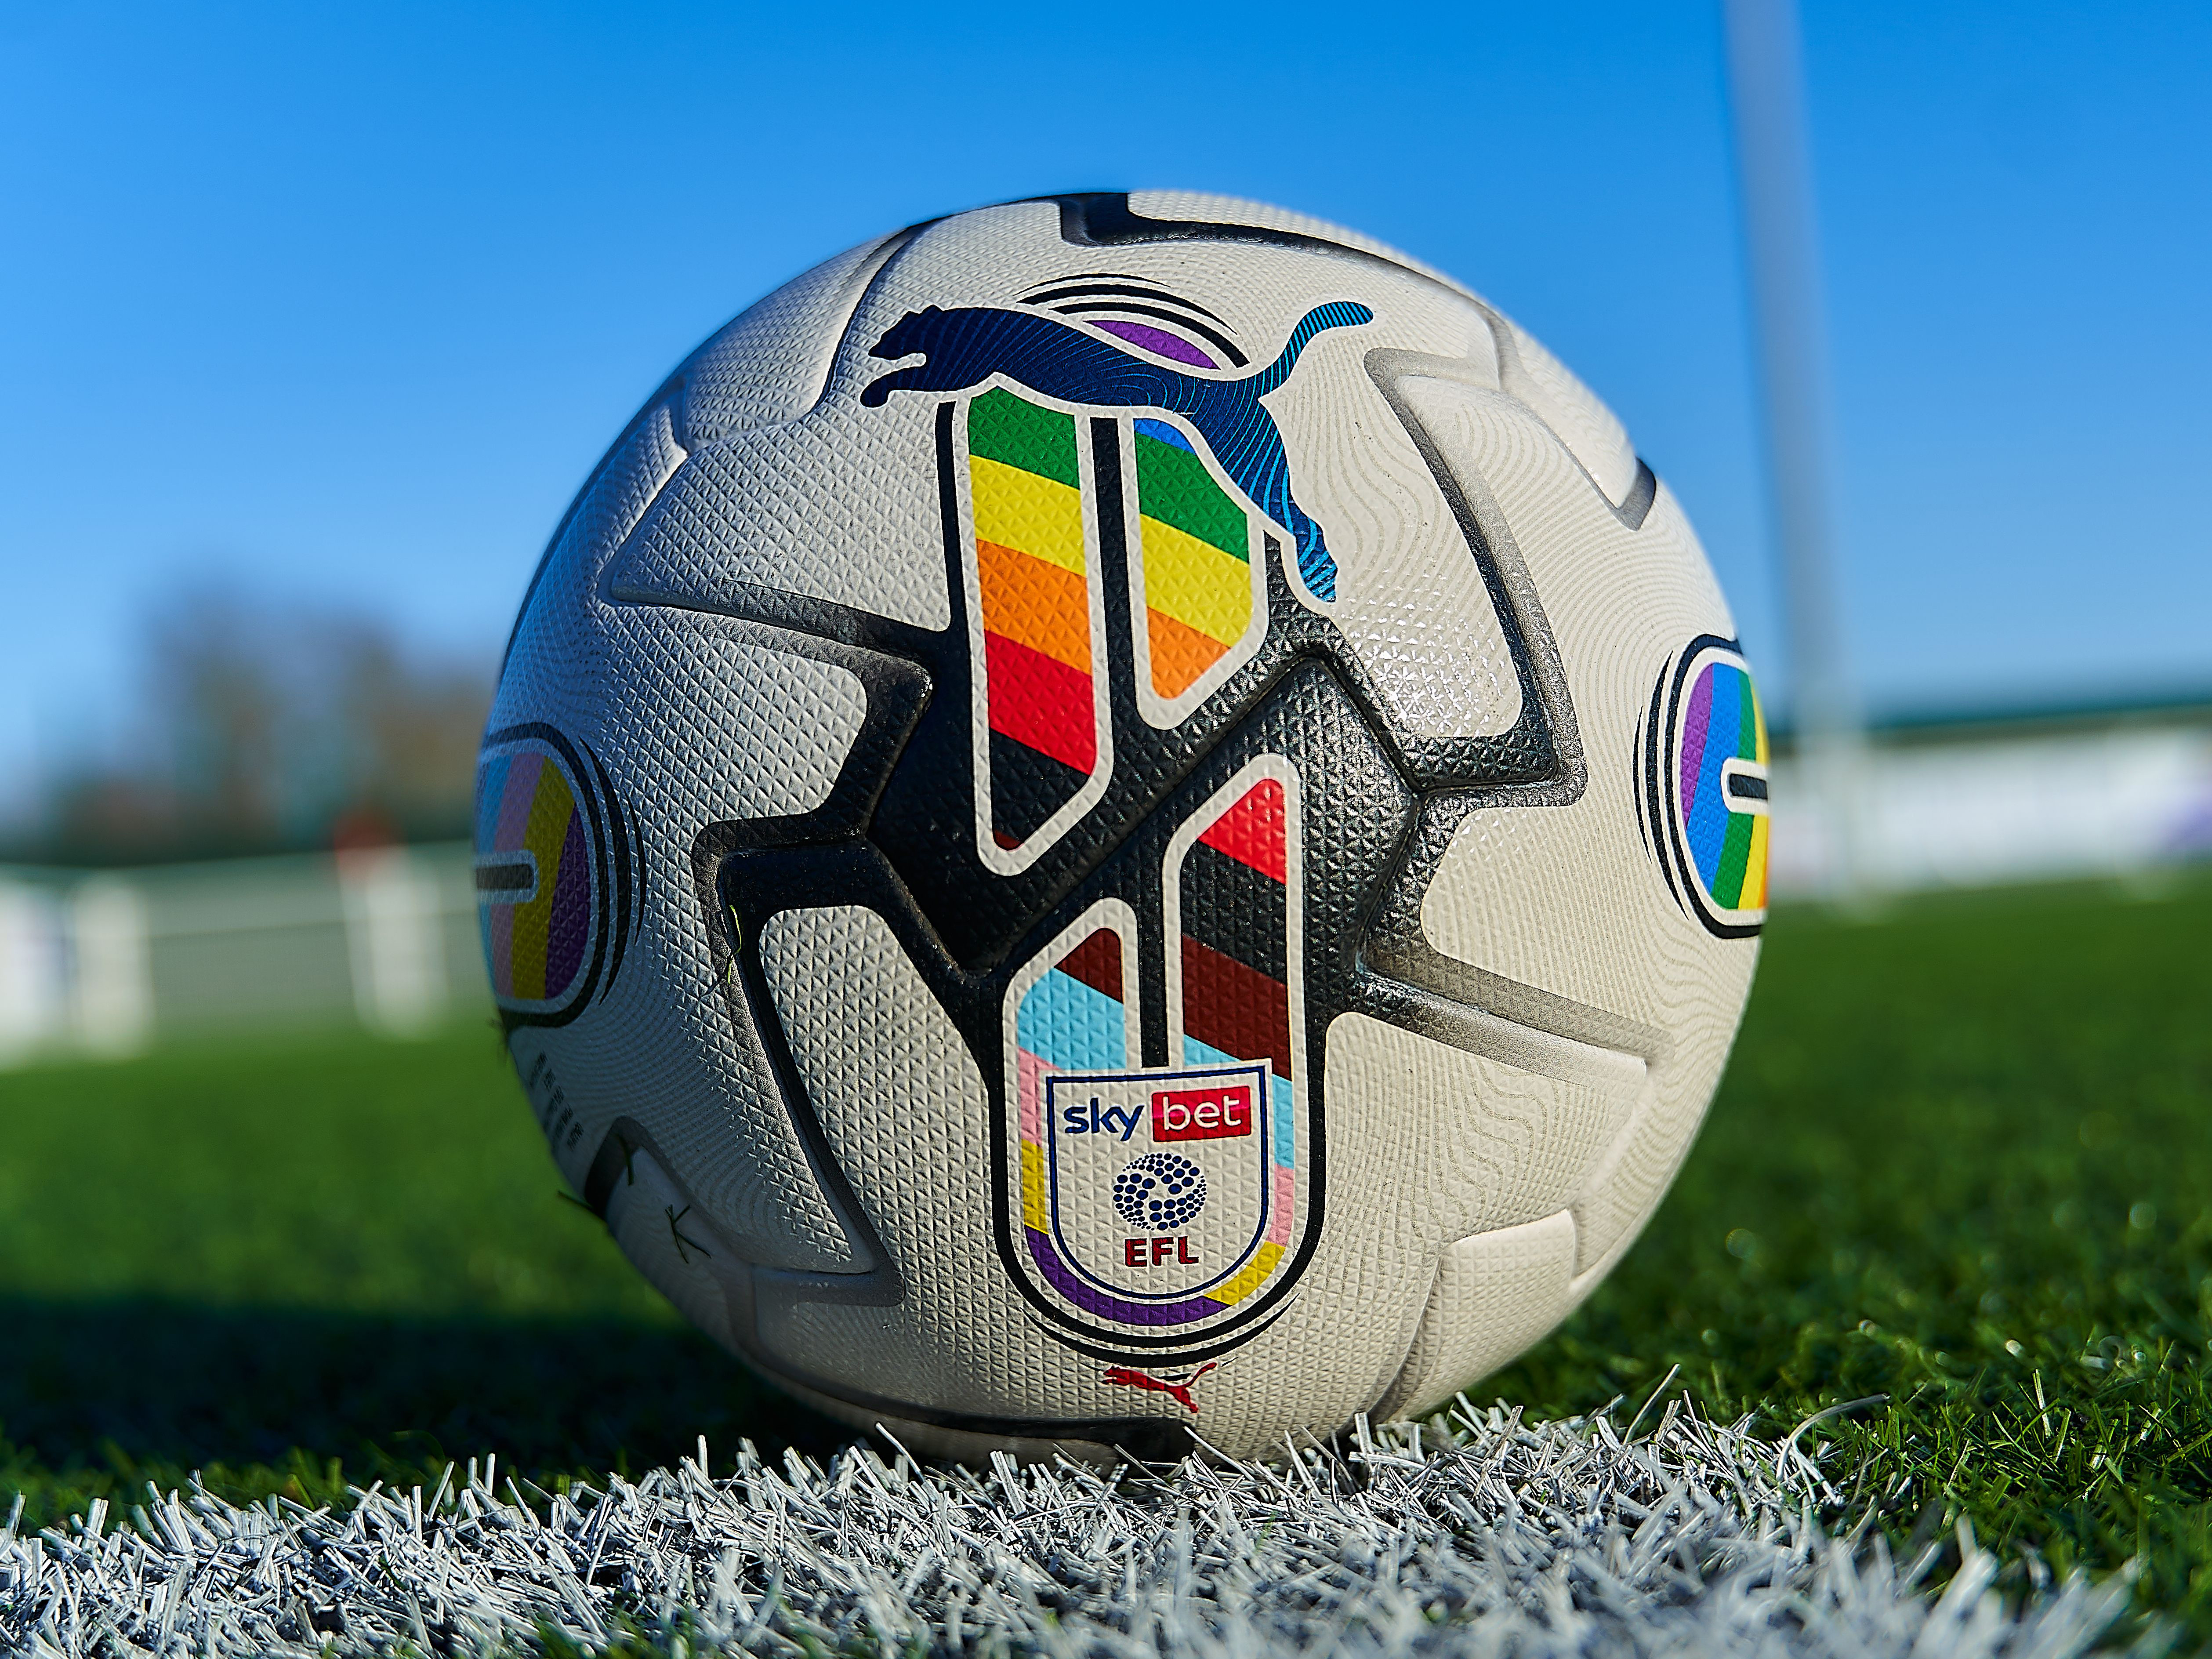 An image of a special puma EFL rainbow football